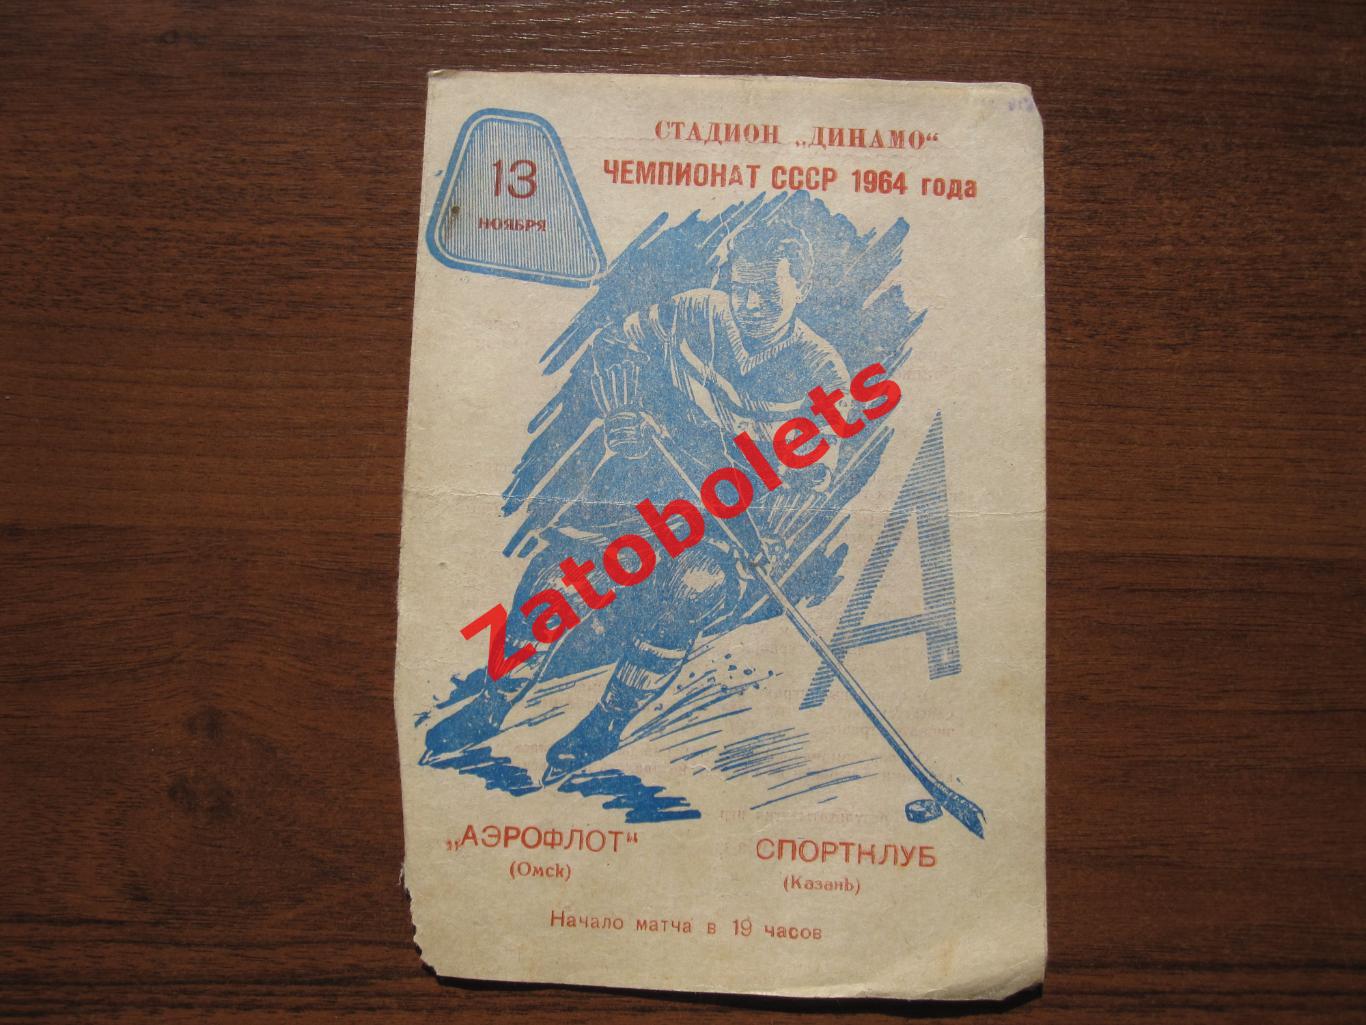 Аэрофлот Омск - Спортклуб Казань 13.11.1963